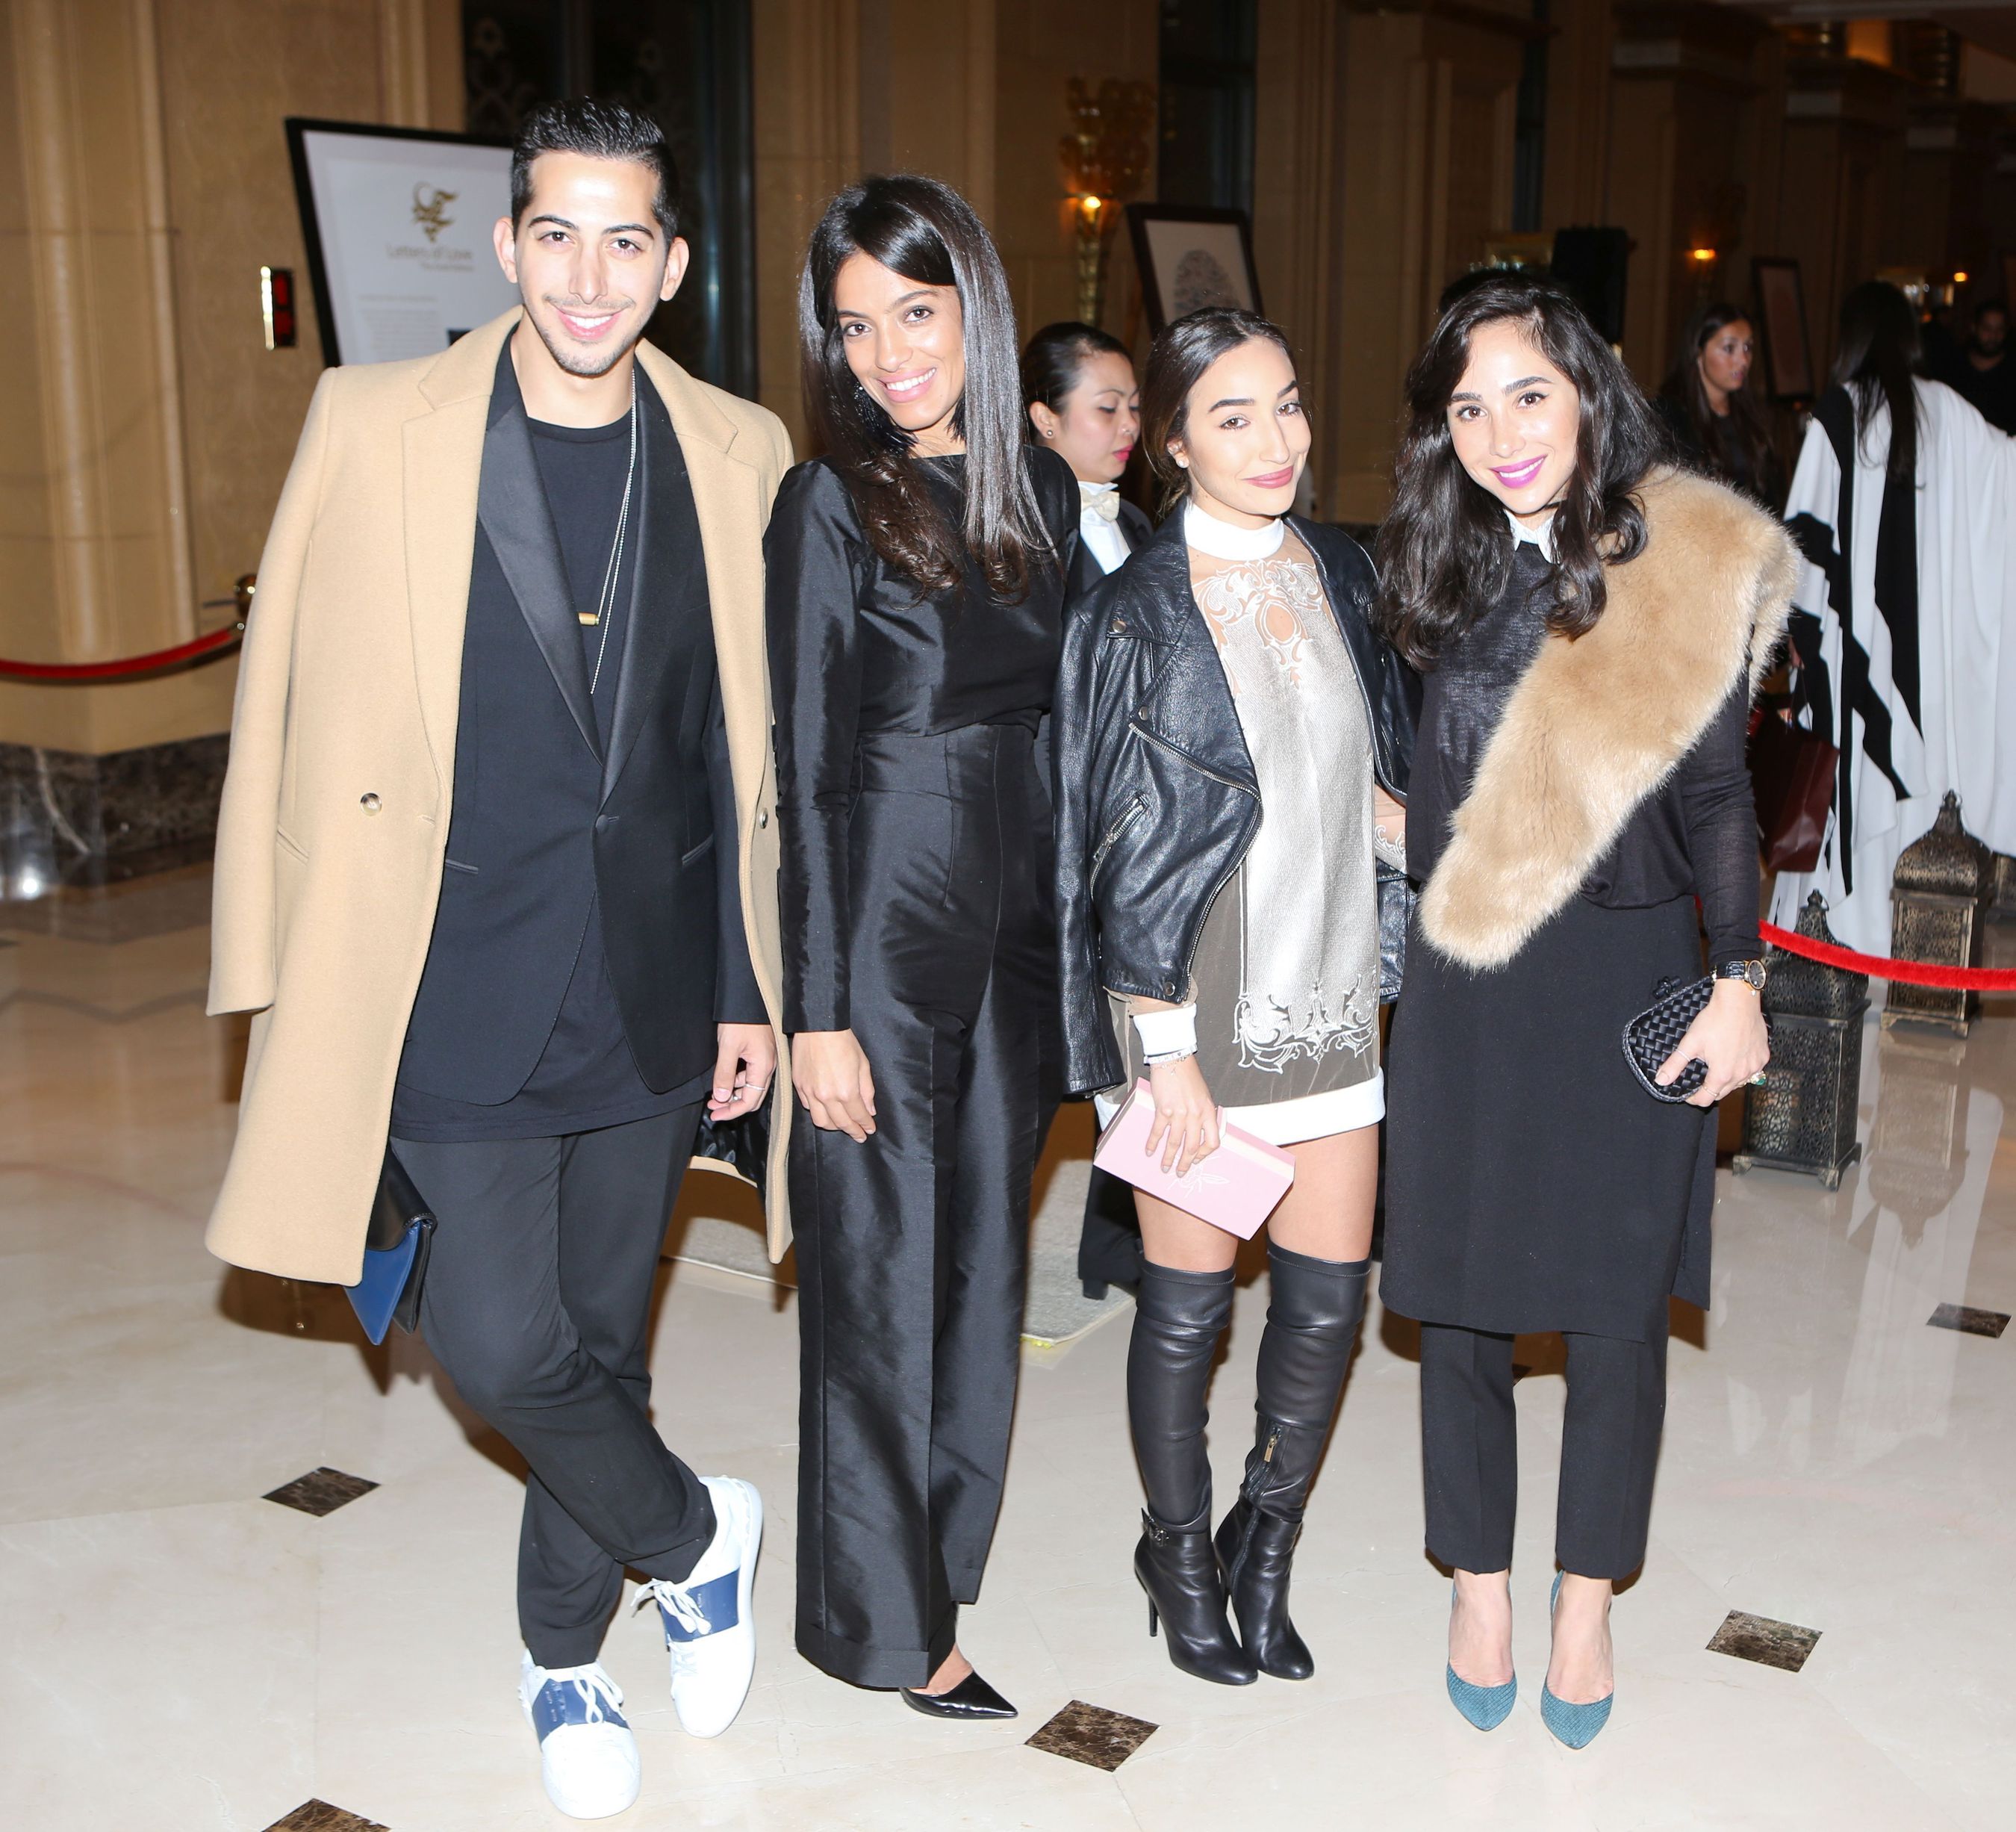 Mahmoud Sidani, Maha Abdul Rasheed, Lina Mustafa and Dana Hourani (PRNewsFoto/Farfetch and Style_com_Arabia)